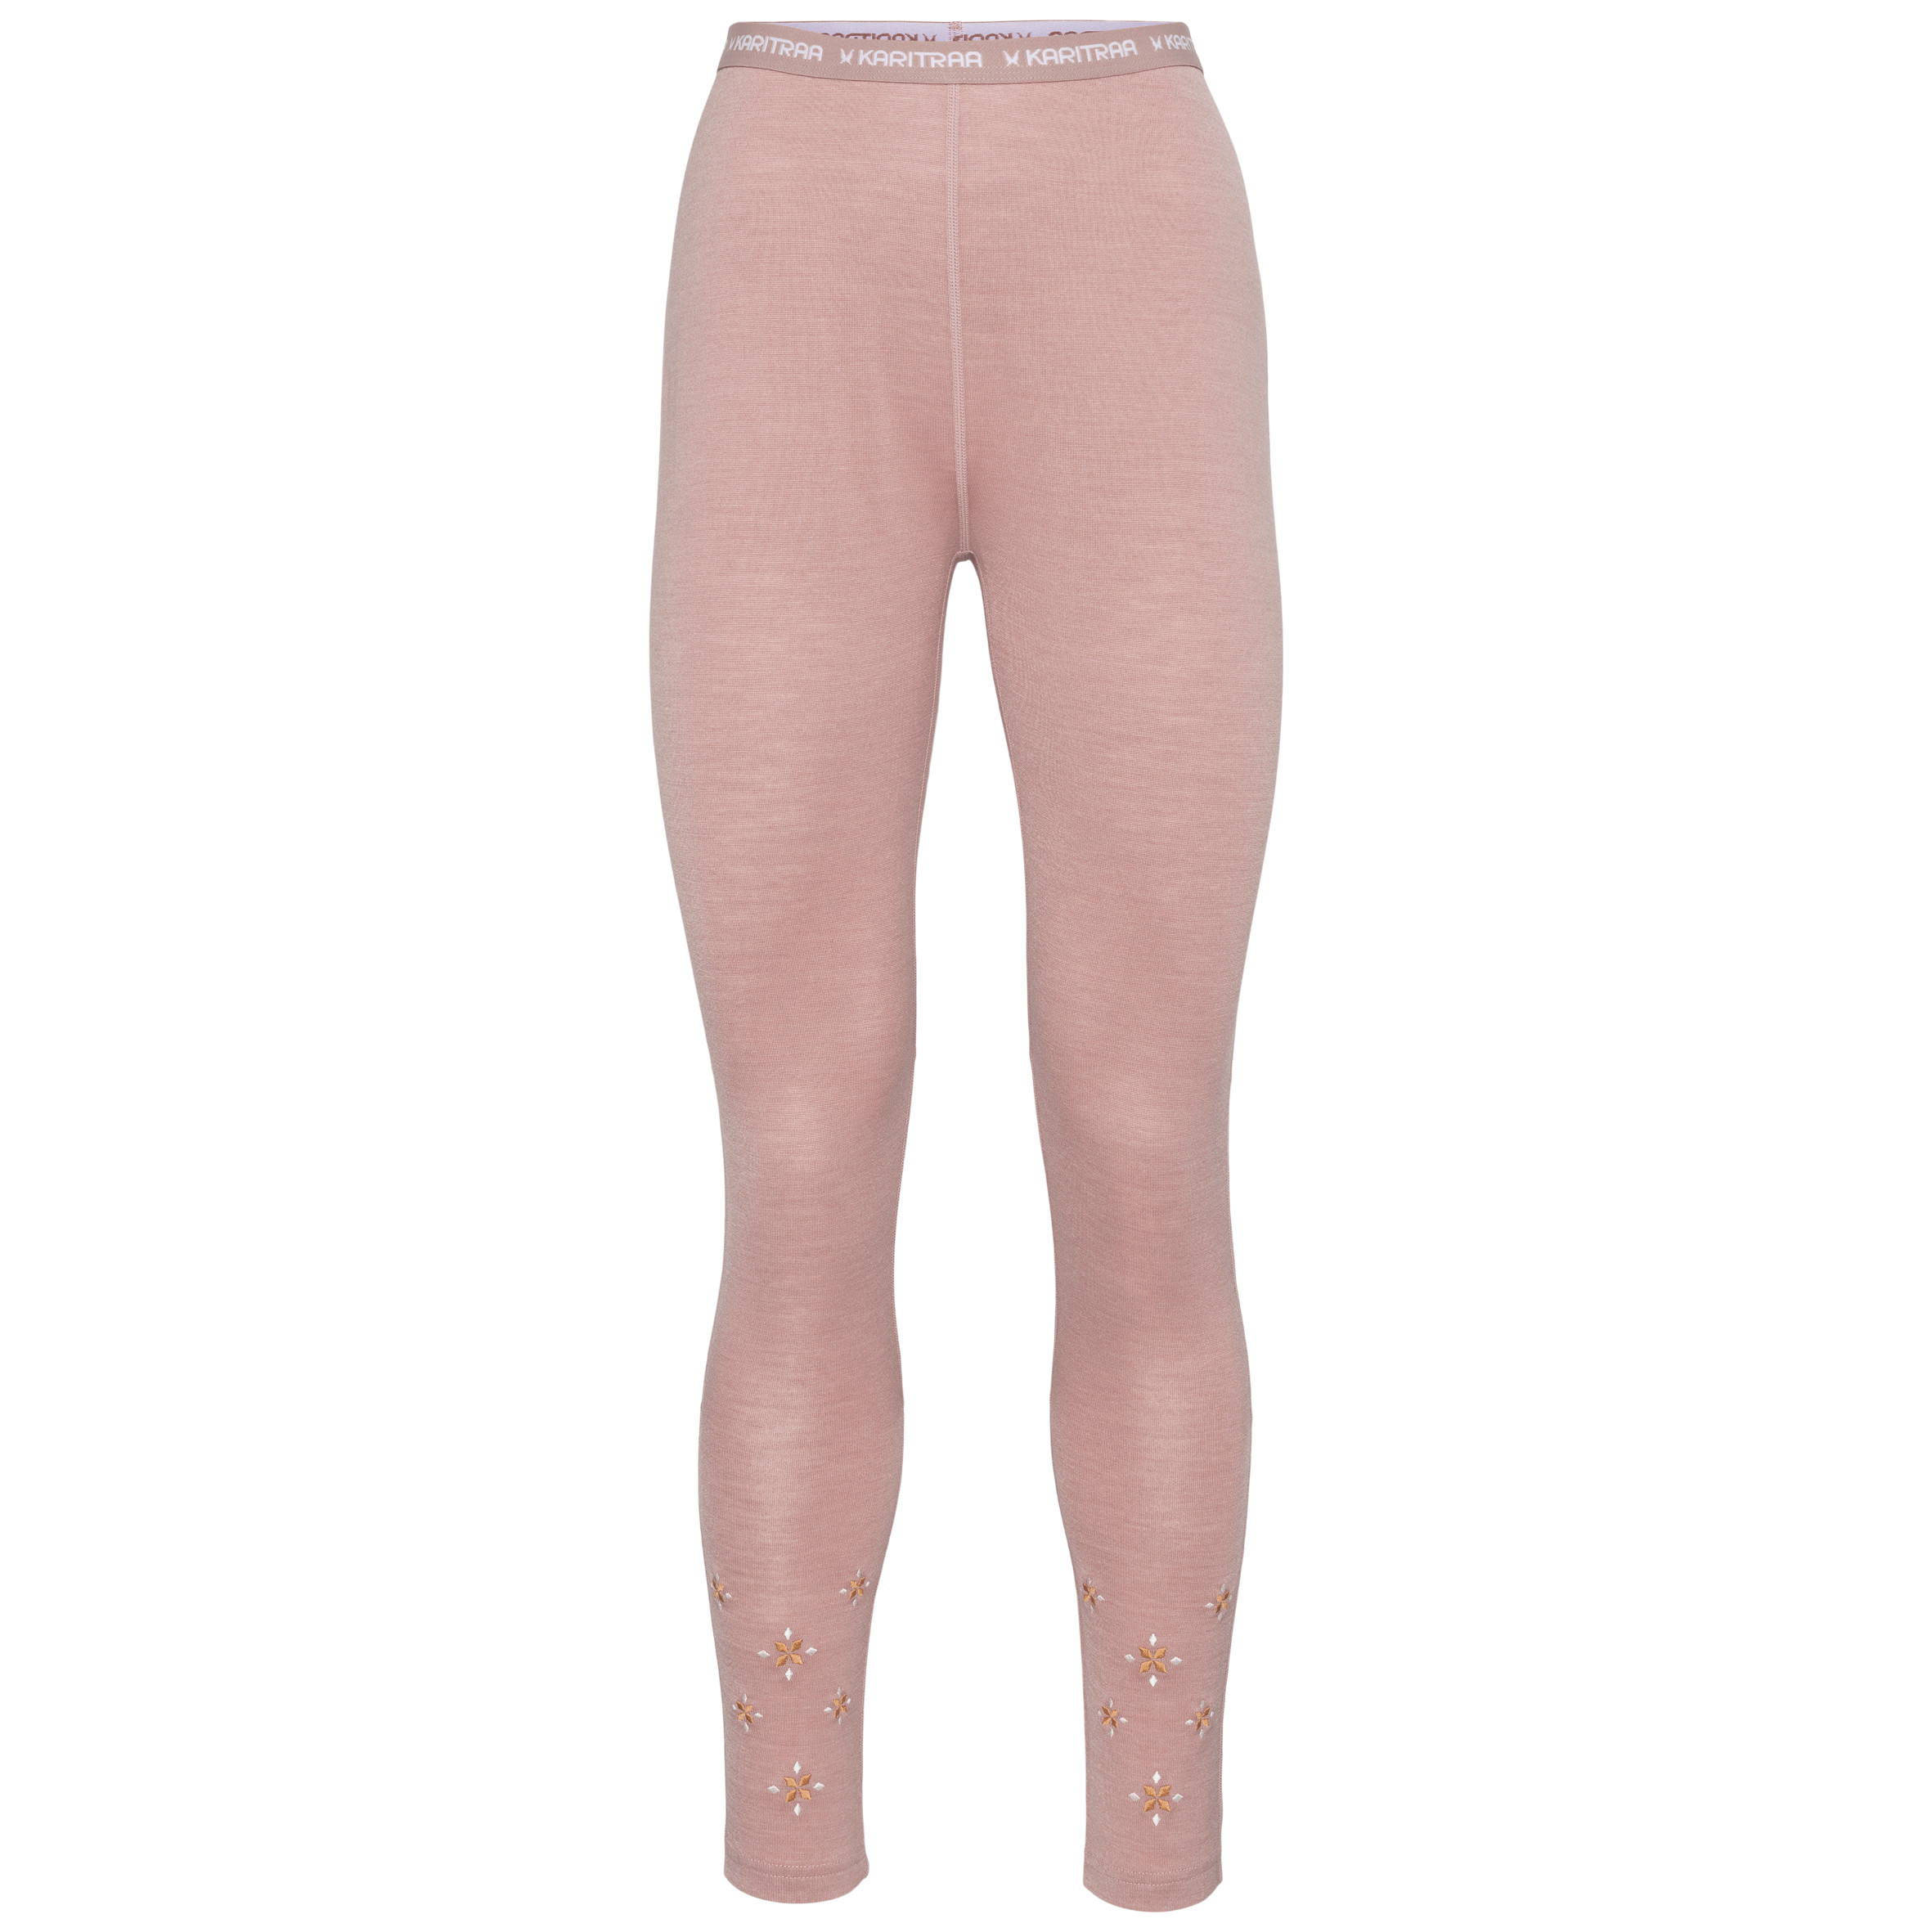 Kari Traa Women’s Summer Wool Pants Light Dusty Pink